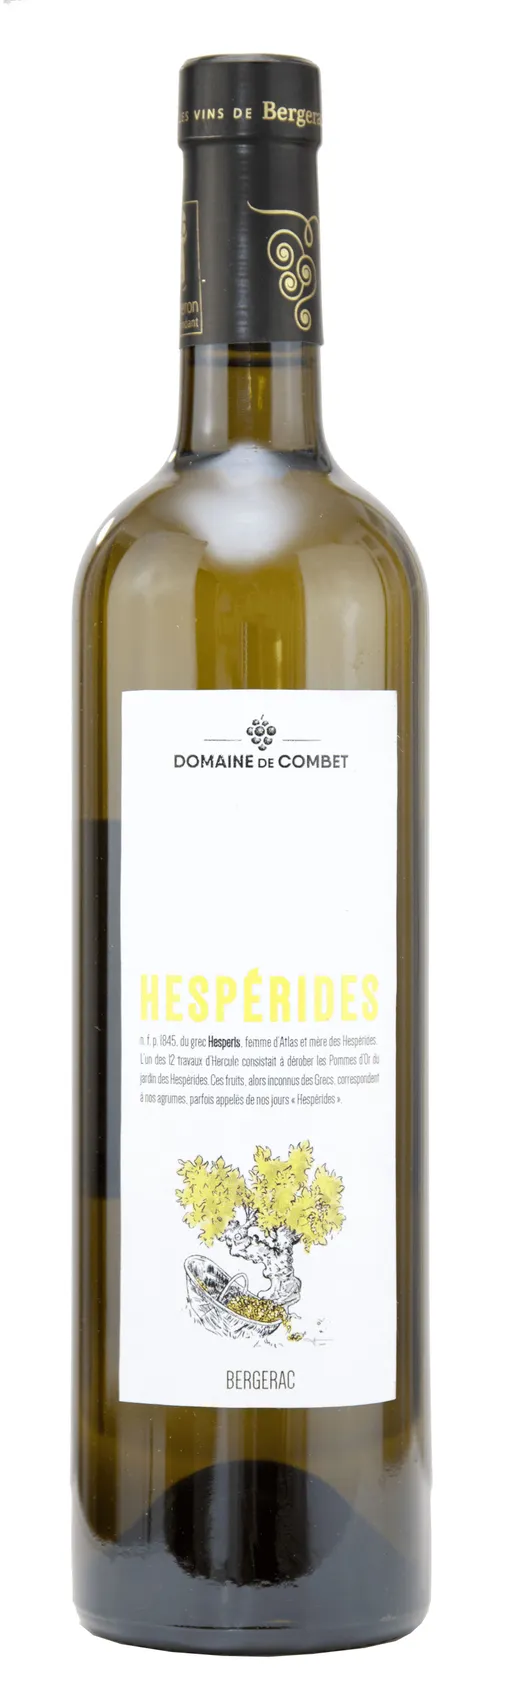 Earl de Combet HESPERIDES, Blanco, 2021, Bergerac. Bottle image